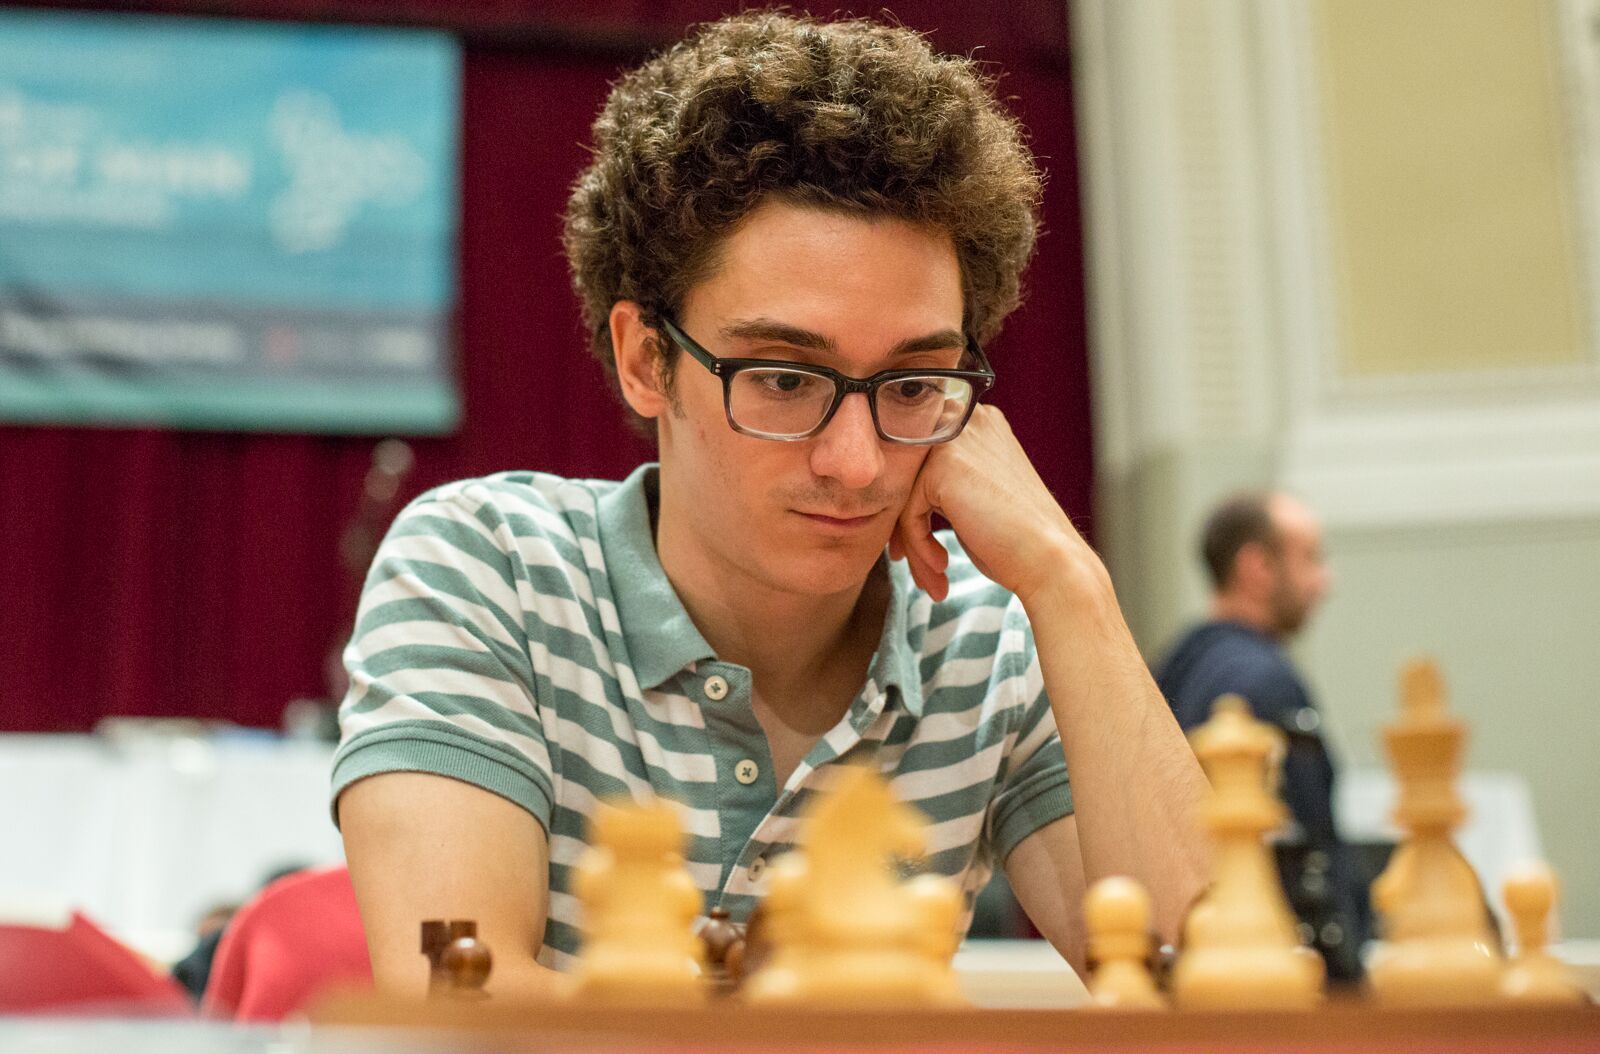 FIDE World Fischer Random Chess Championship Quarterfinals Kick Off 